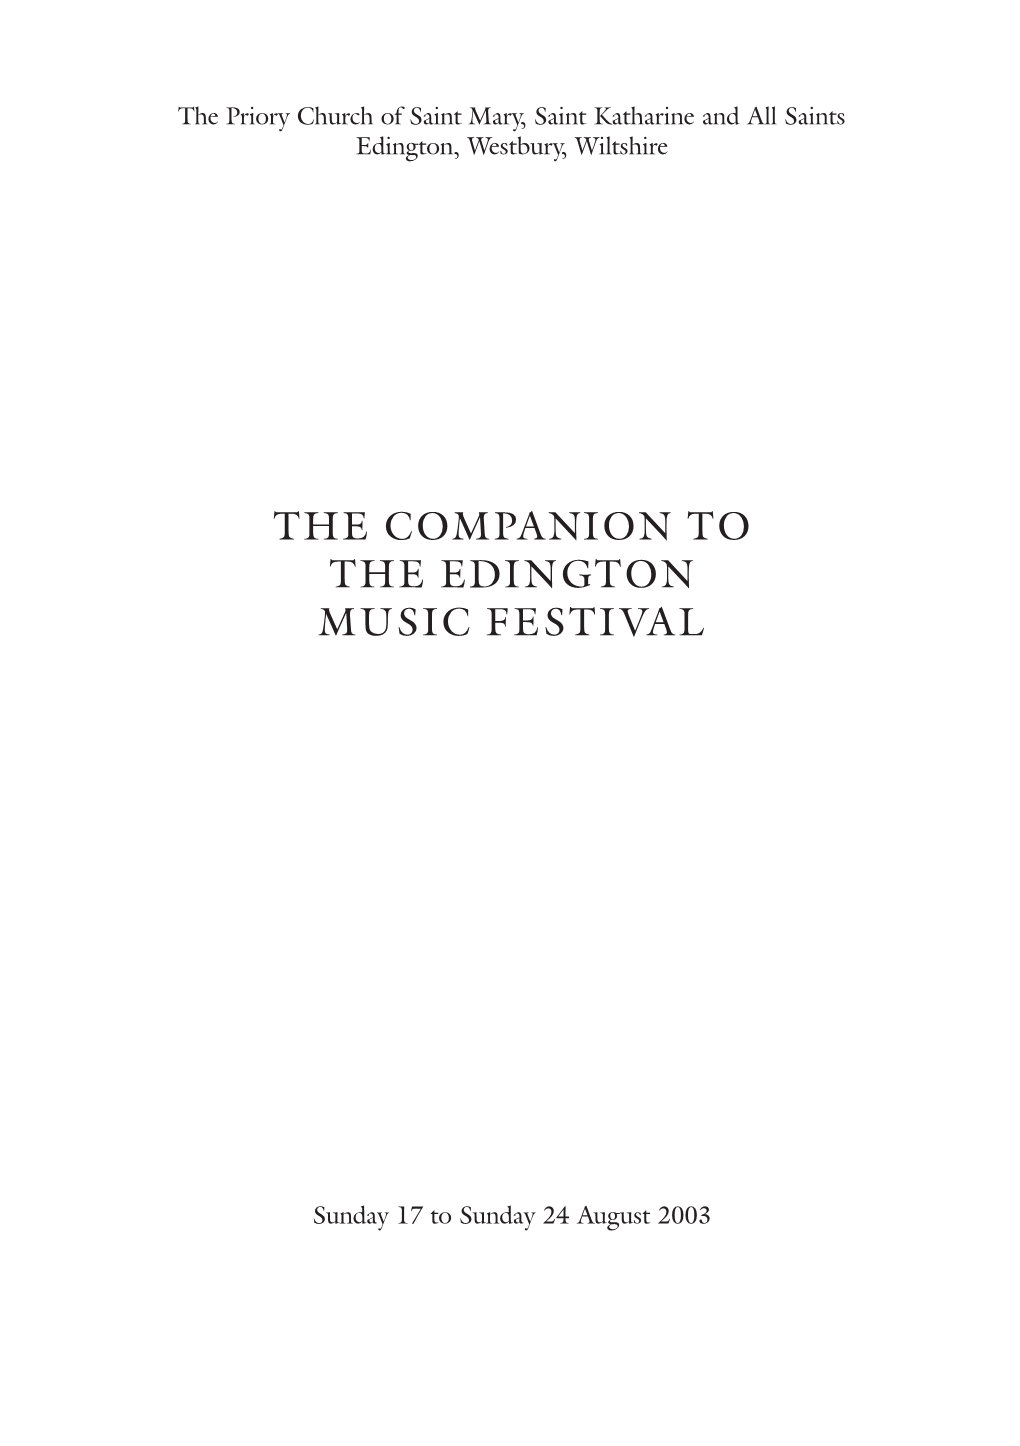 The Companion to the Edington Music Festival